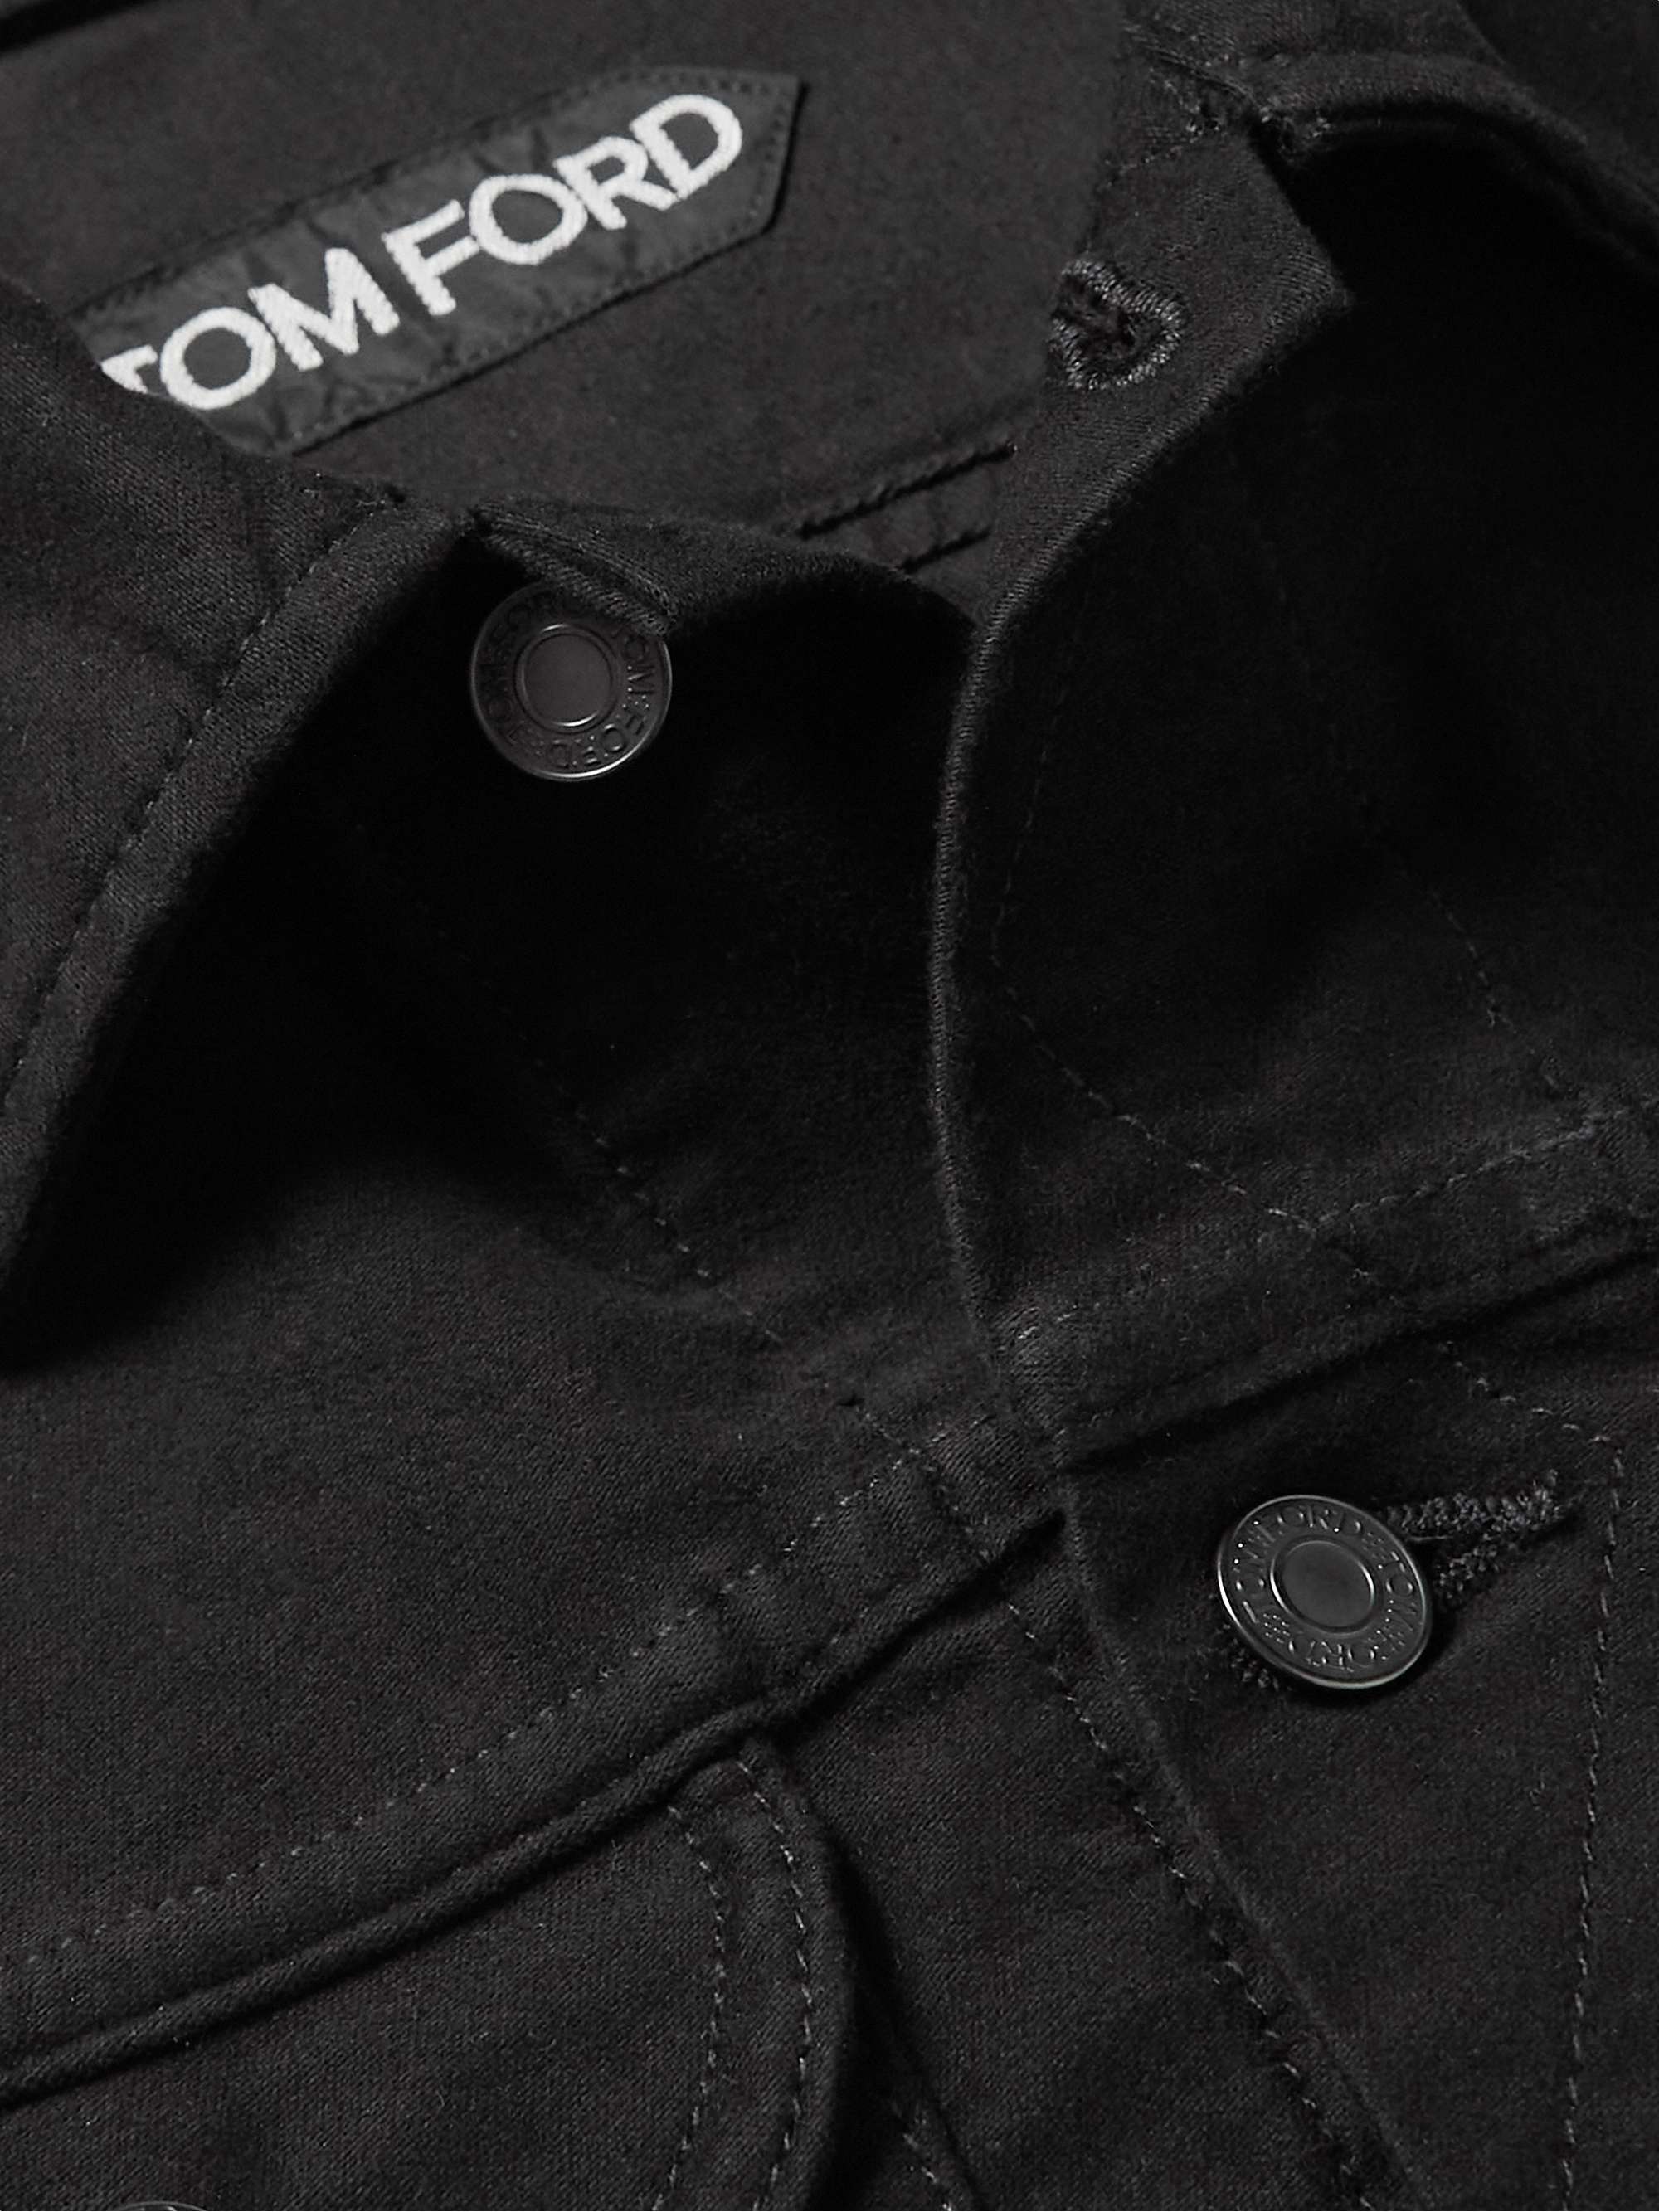 TOM FORD Leather-Trimmed Cotton-Moleskin Jacket